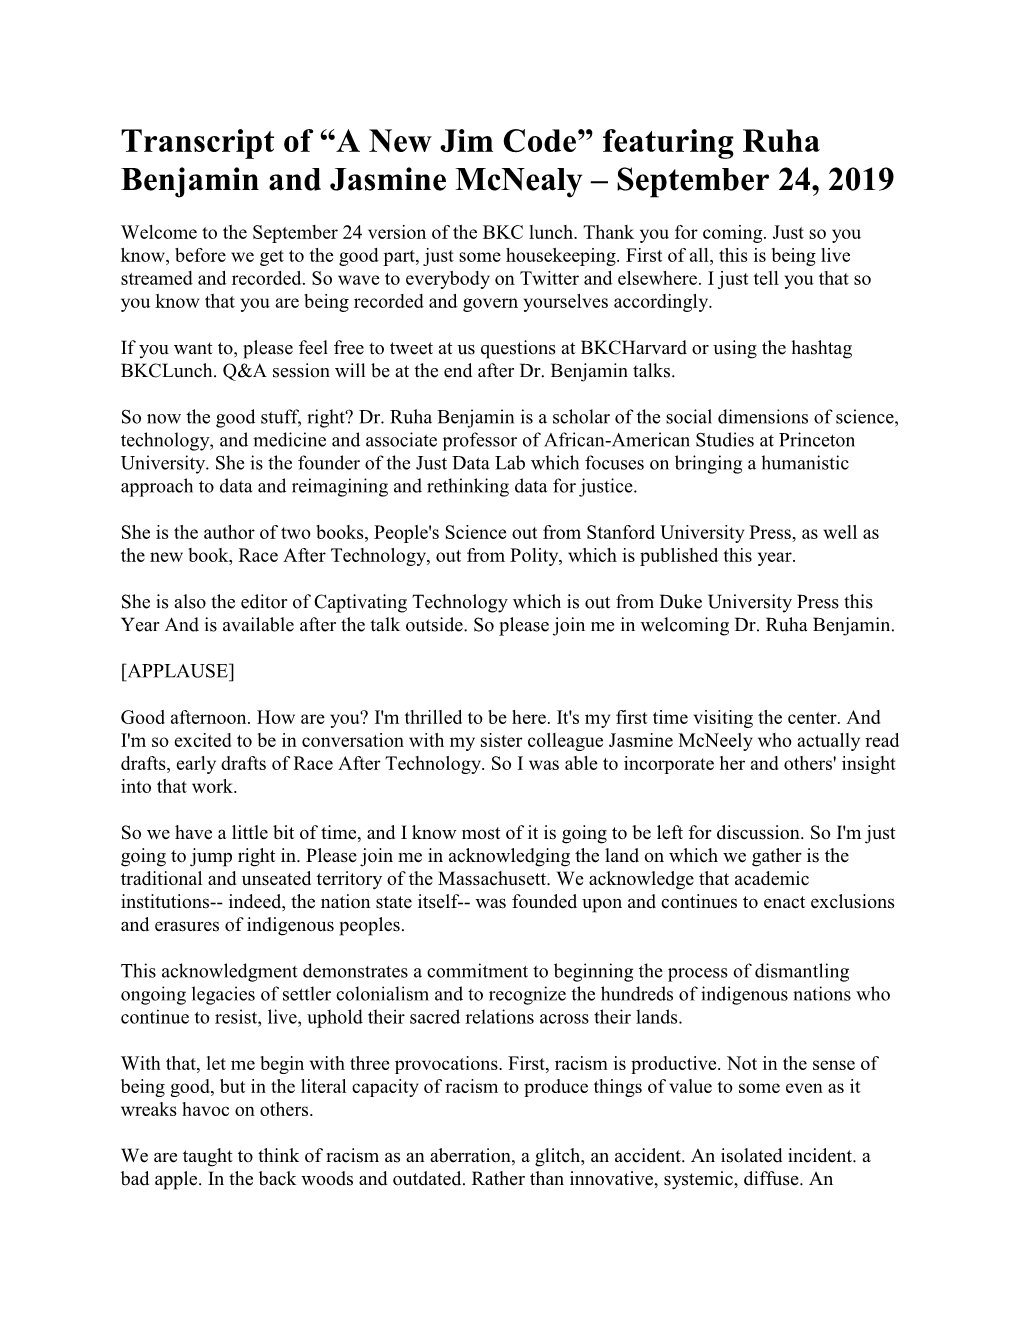 “A New Jim Code” Featuring Ruha Benjamin and Jasmine Mcnealy – September 24, 2019